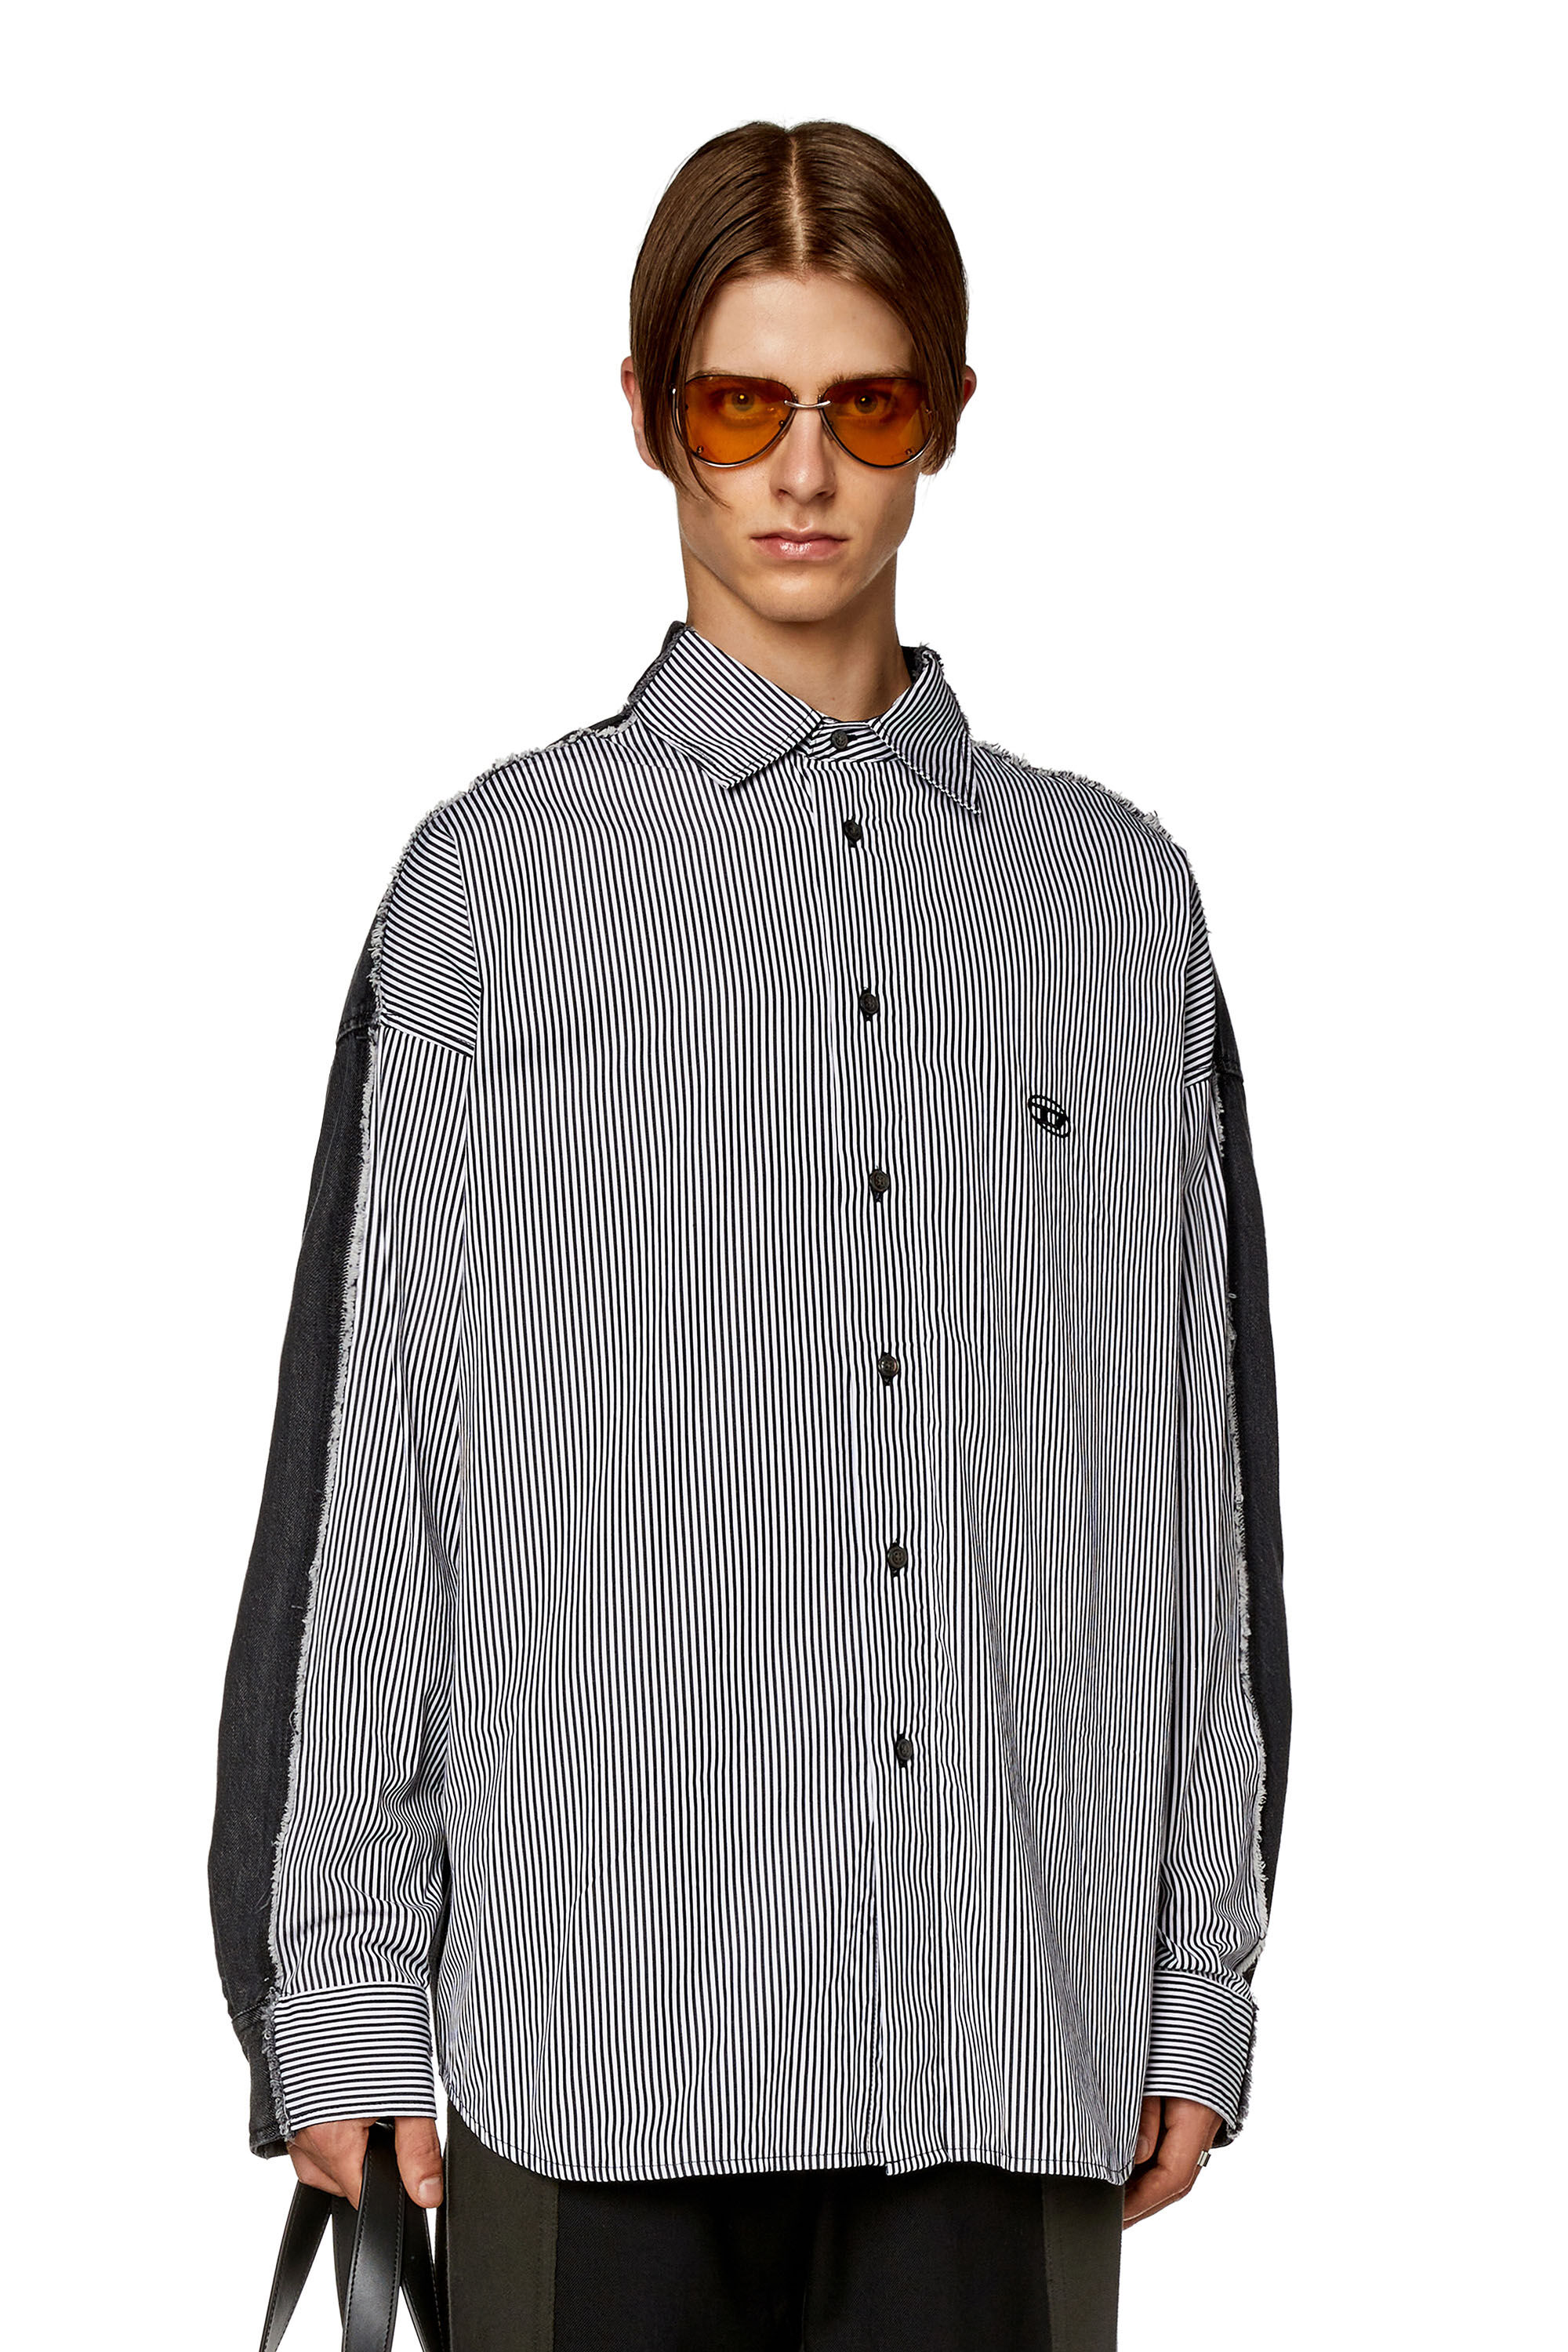 Diesel - S-WARH-STRIPE, Man Striped shirt with denim back in Multicolor - Image 3